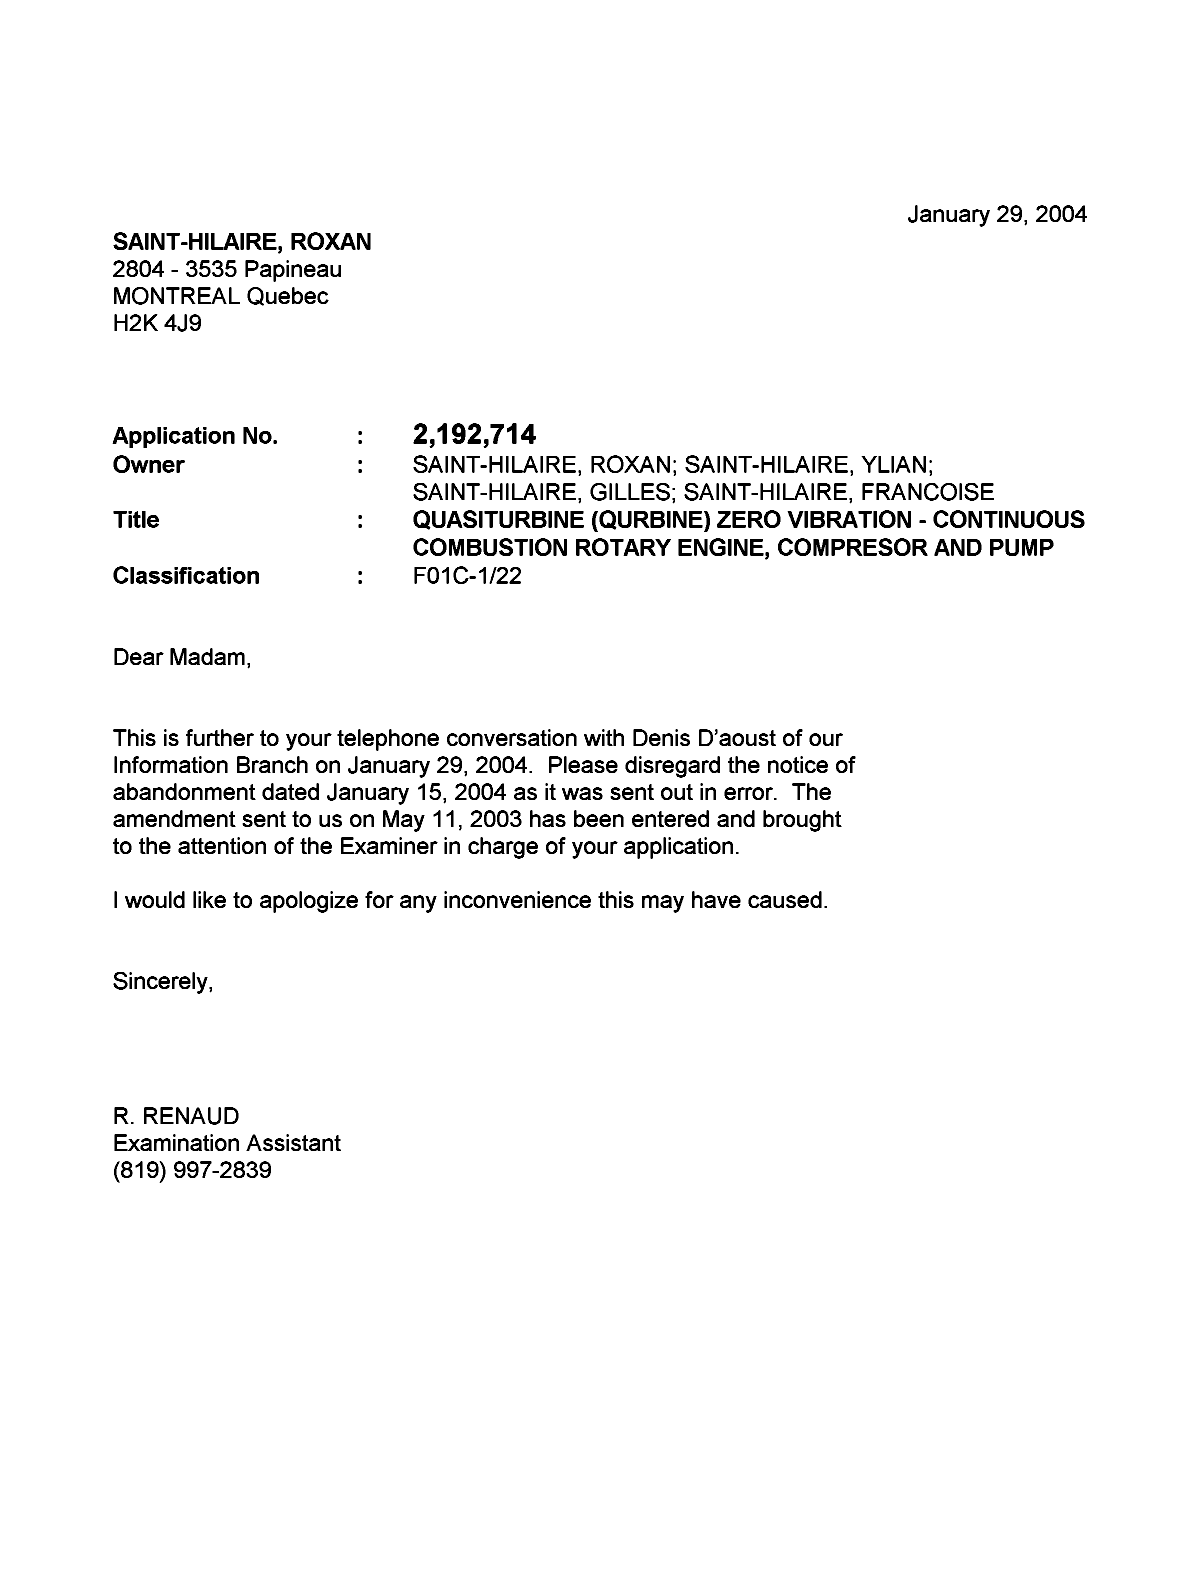 Canadian Patent Document 2192714. Correspondence 20031229. Image 1 of 1